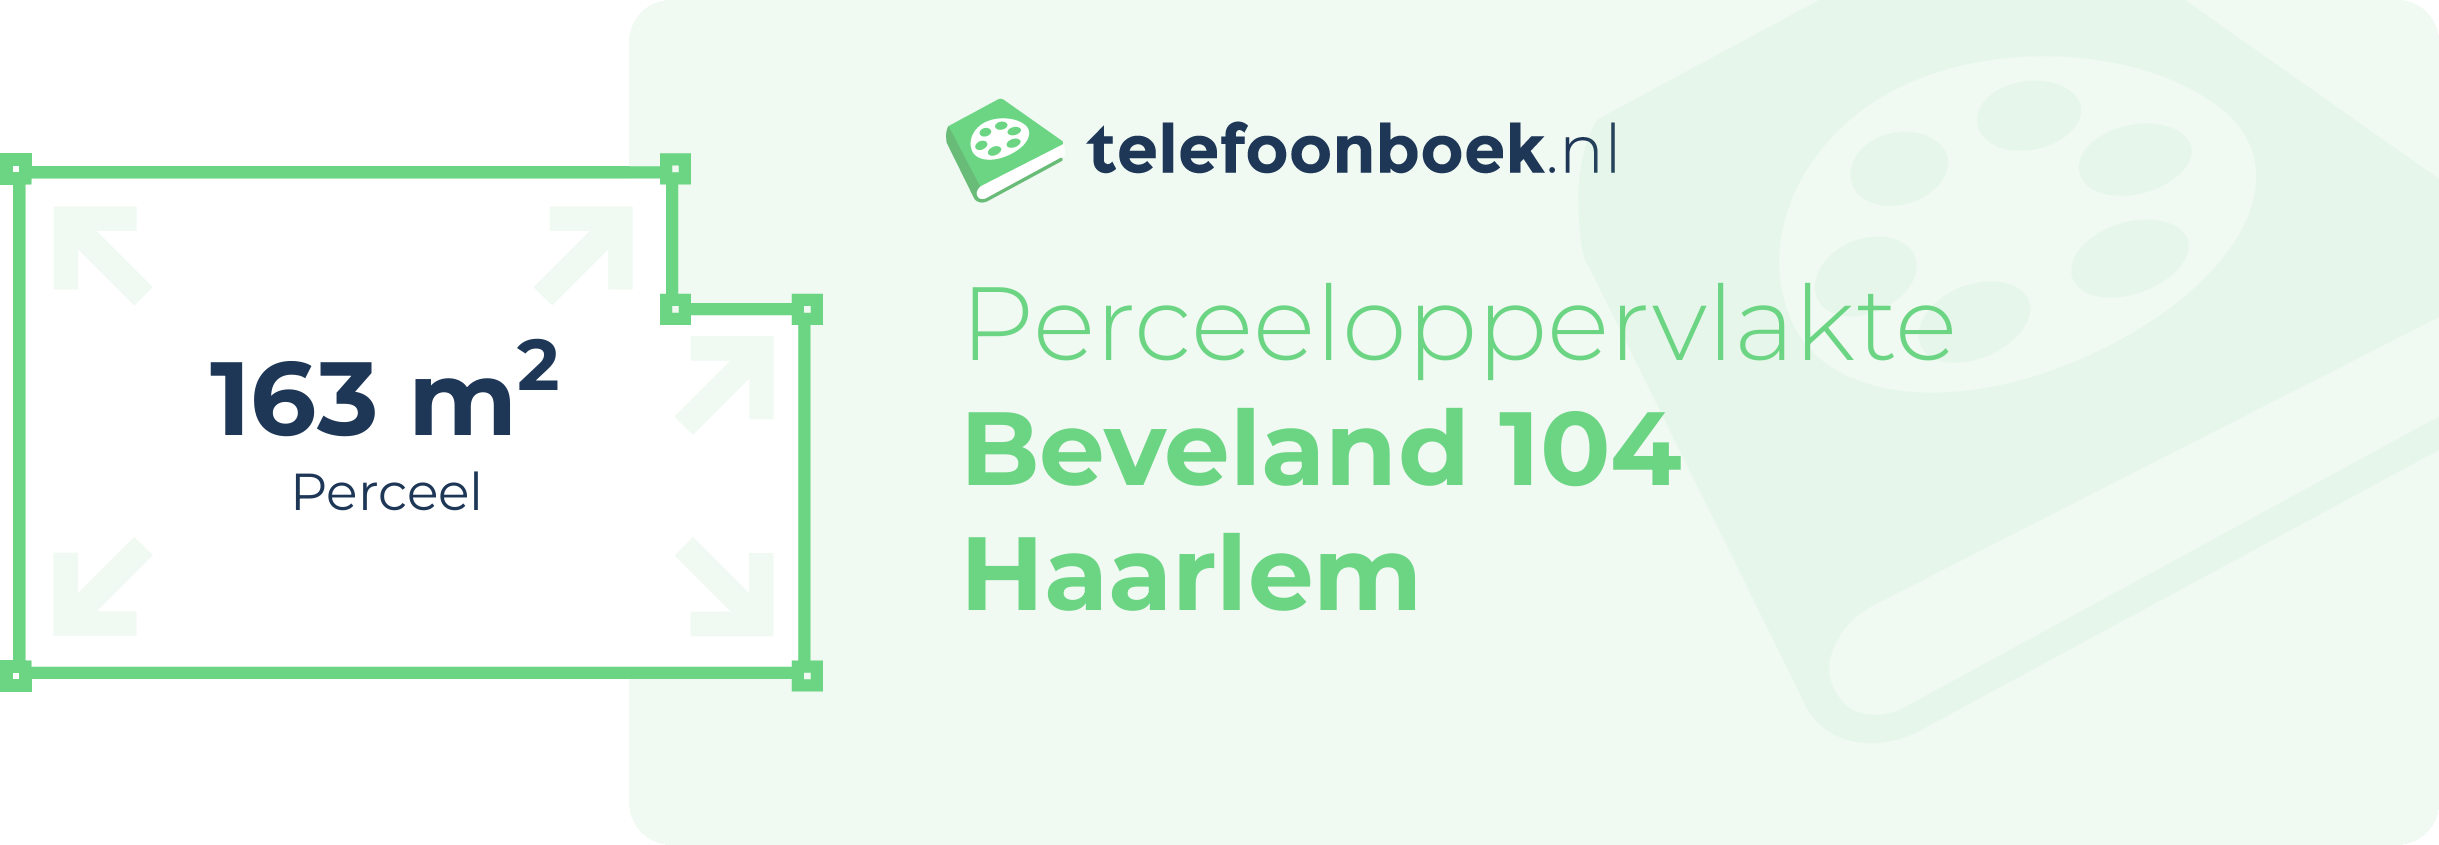 Perceeloppervlakte Beveland 104 Haarlem